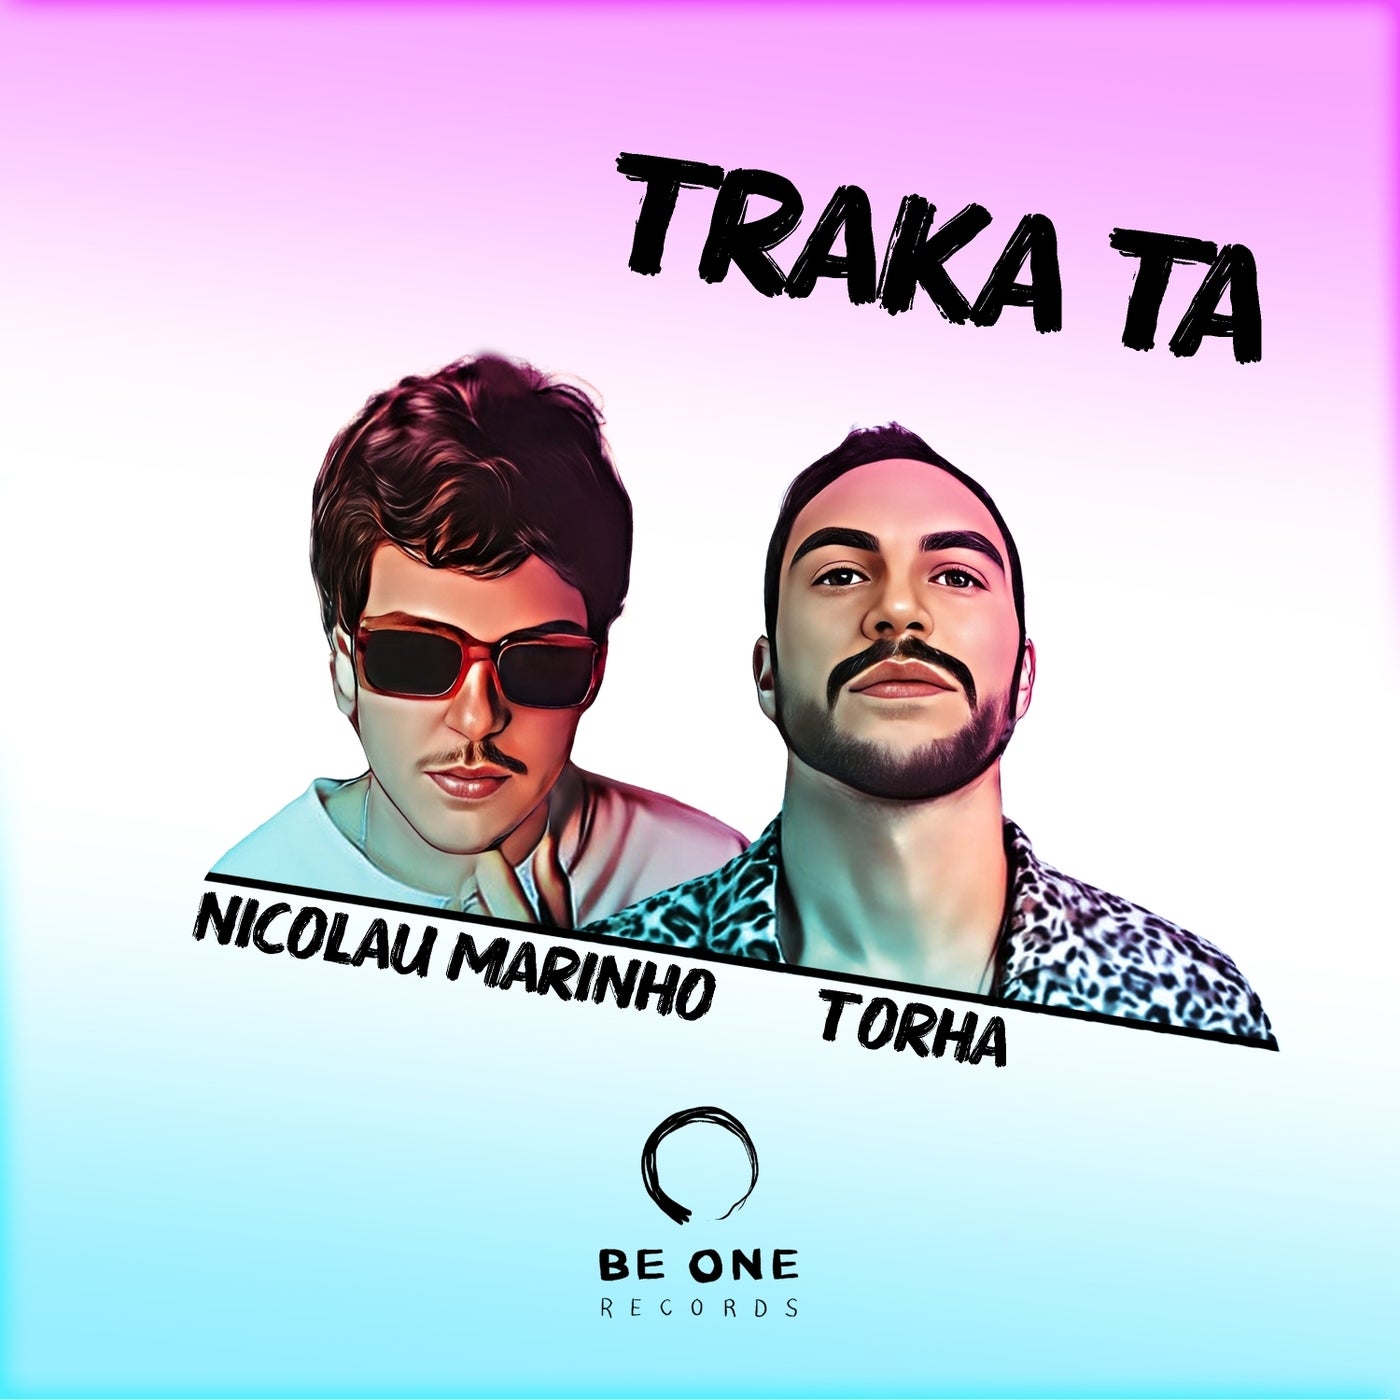 image cover: Torha, Nicolau Marinho - Traka Ta on Be One Records